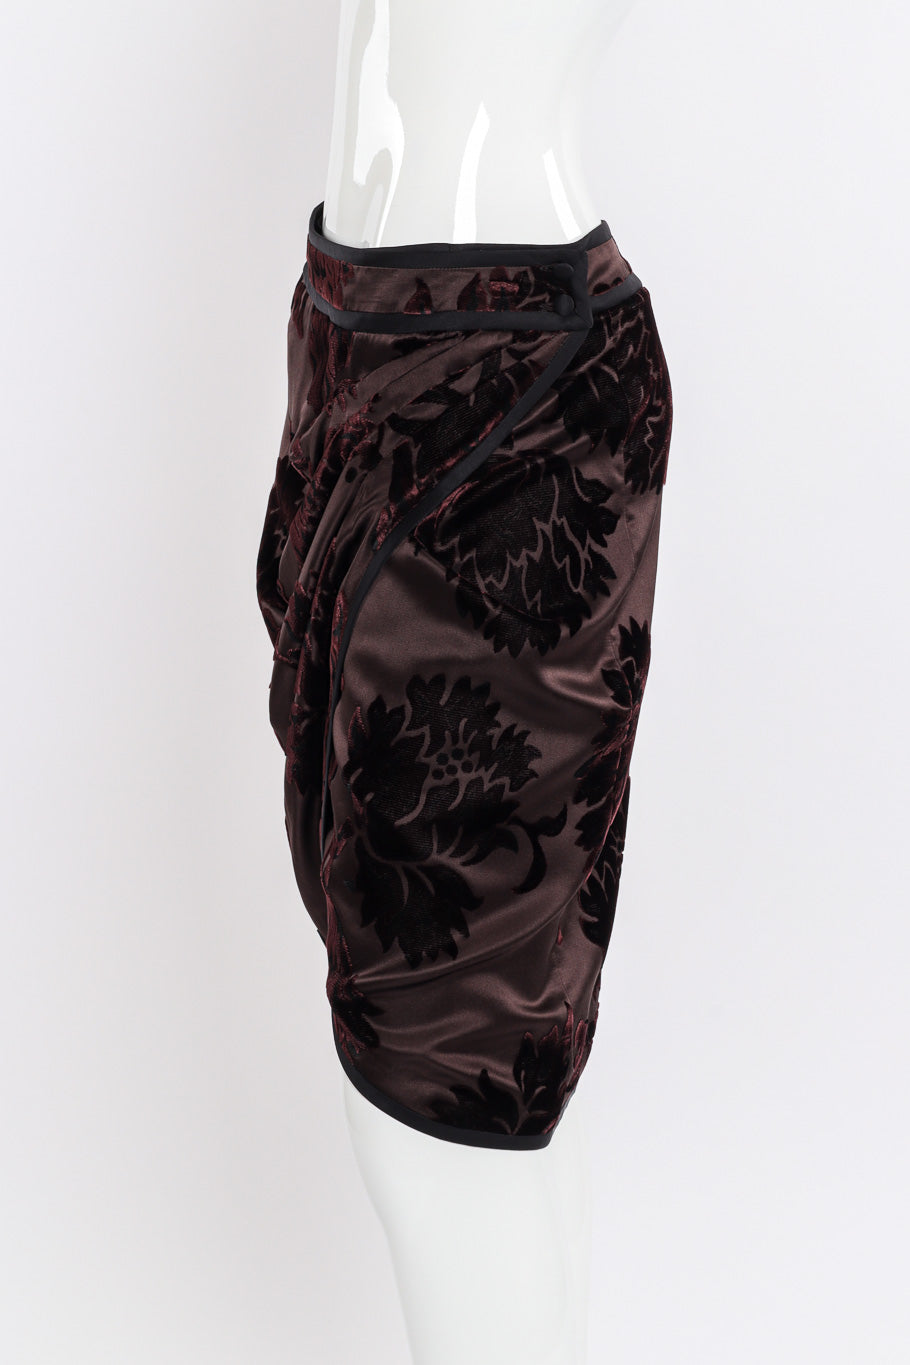 Gucci Velvet Burnout Wrap Skirt side view on mannequin @Recessla